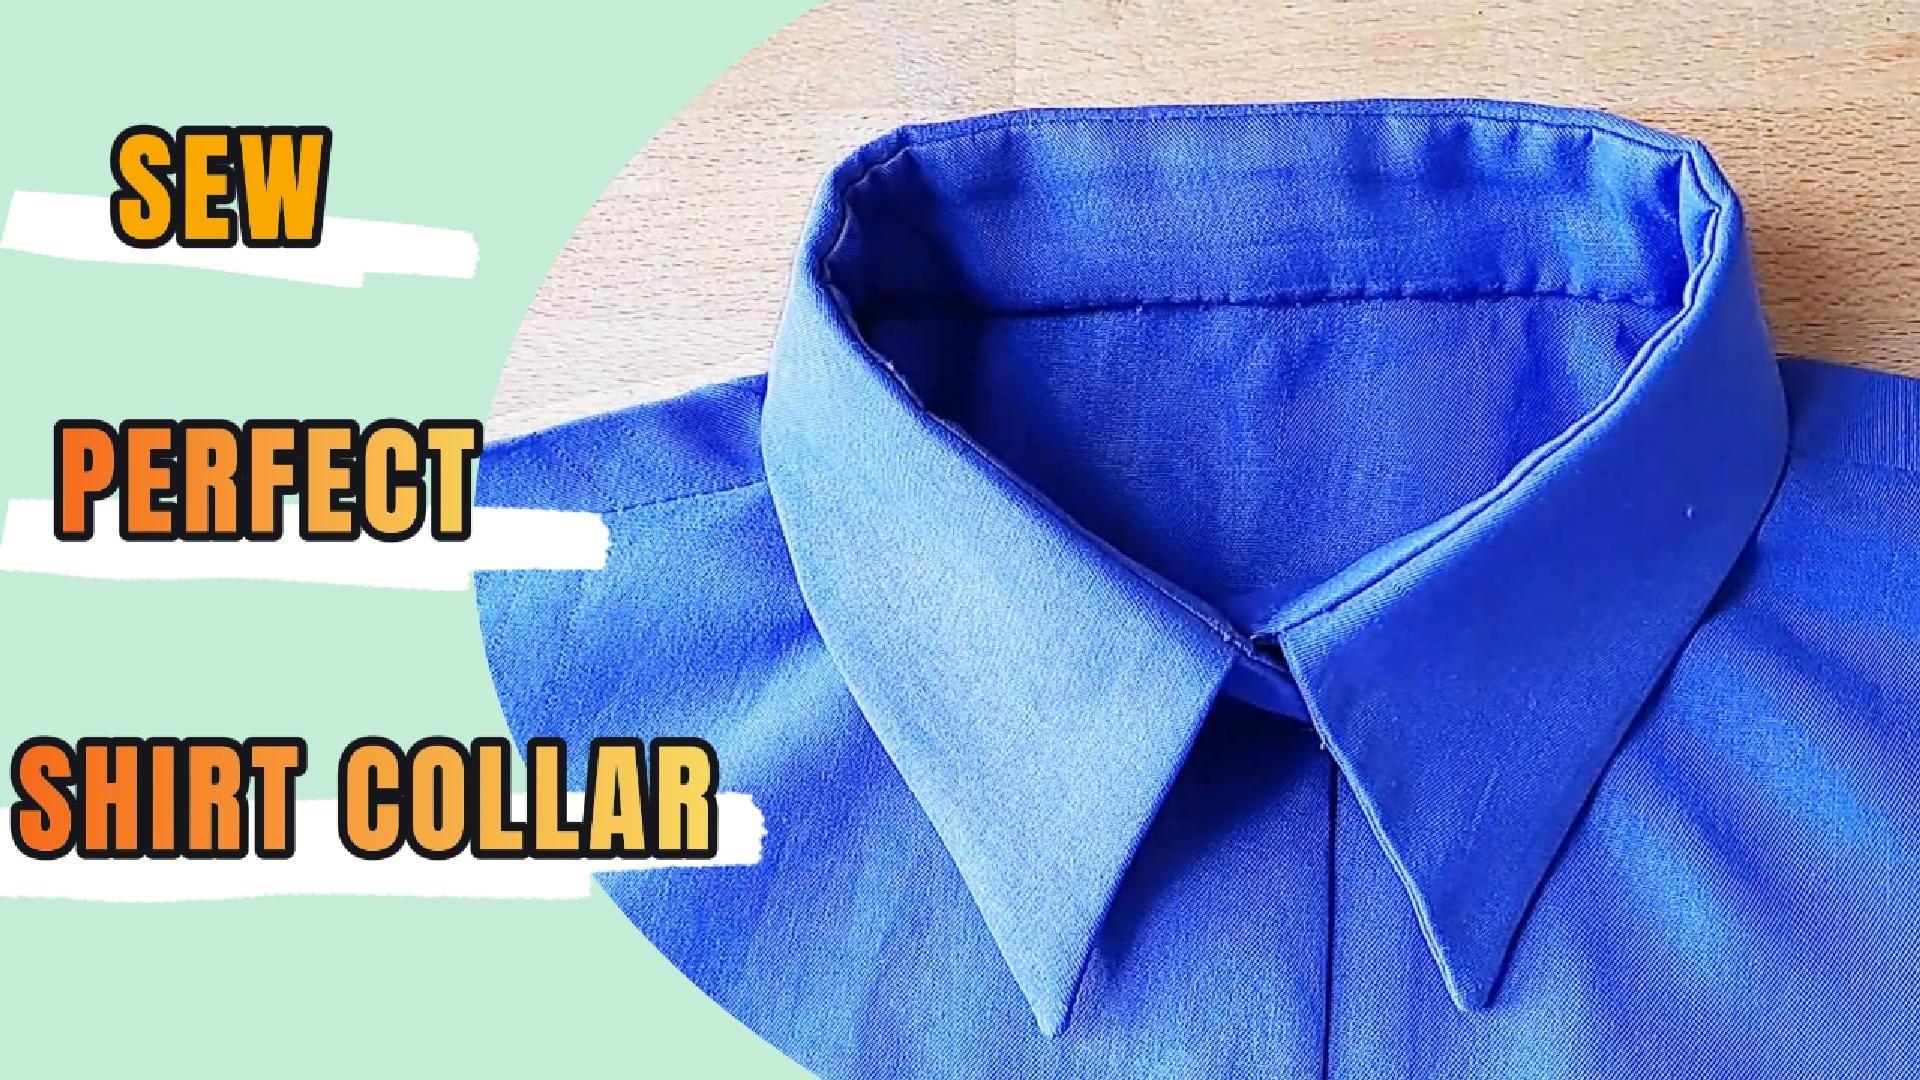 Sewing perfect shirt collar